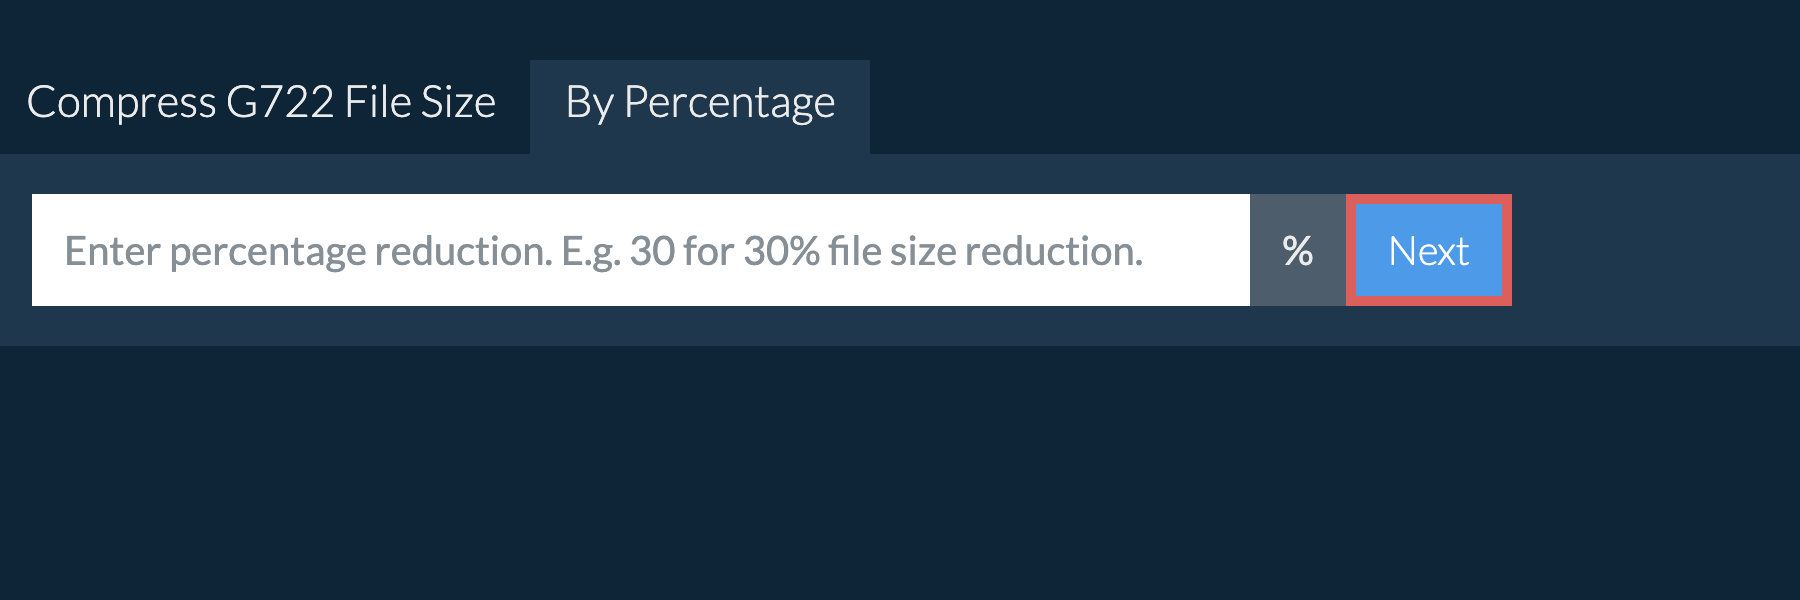 Reduce g722 By Percentage